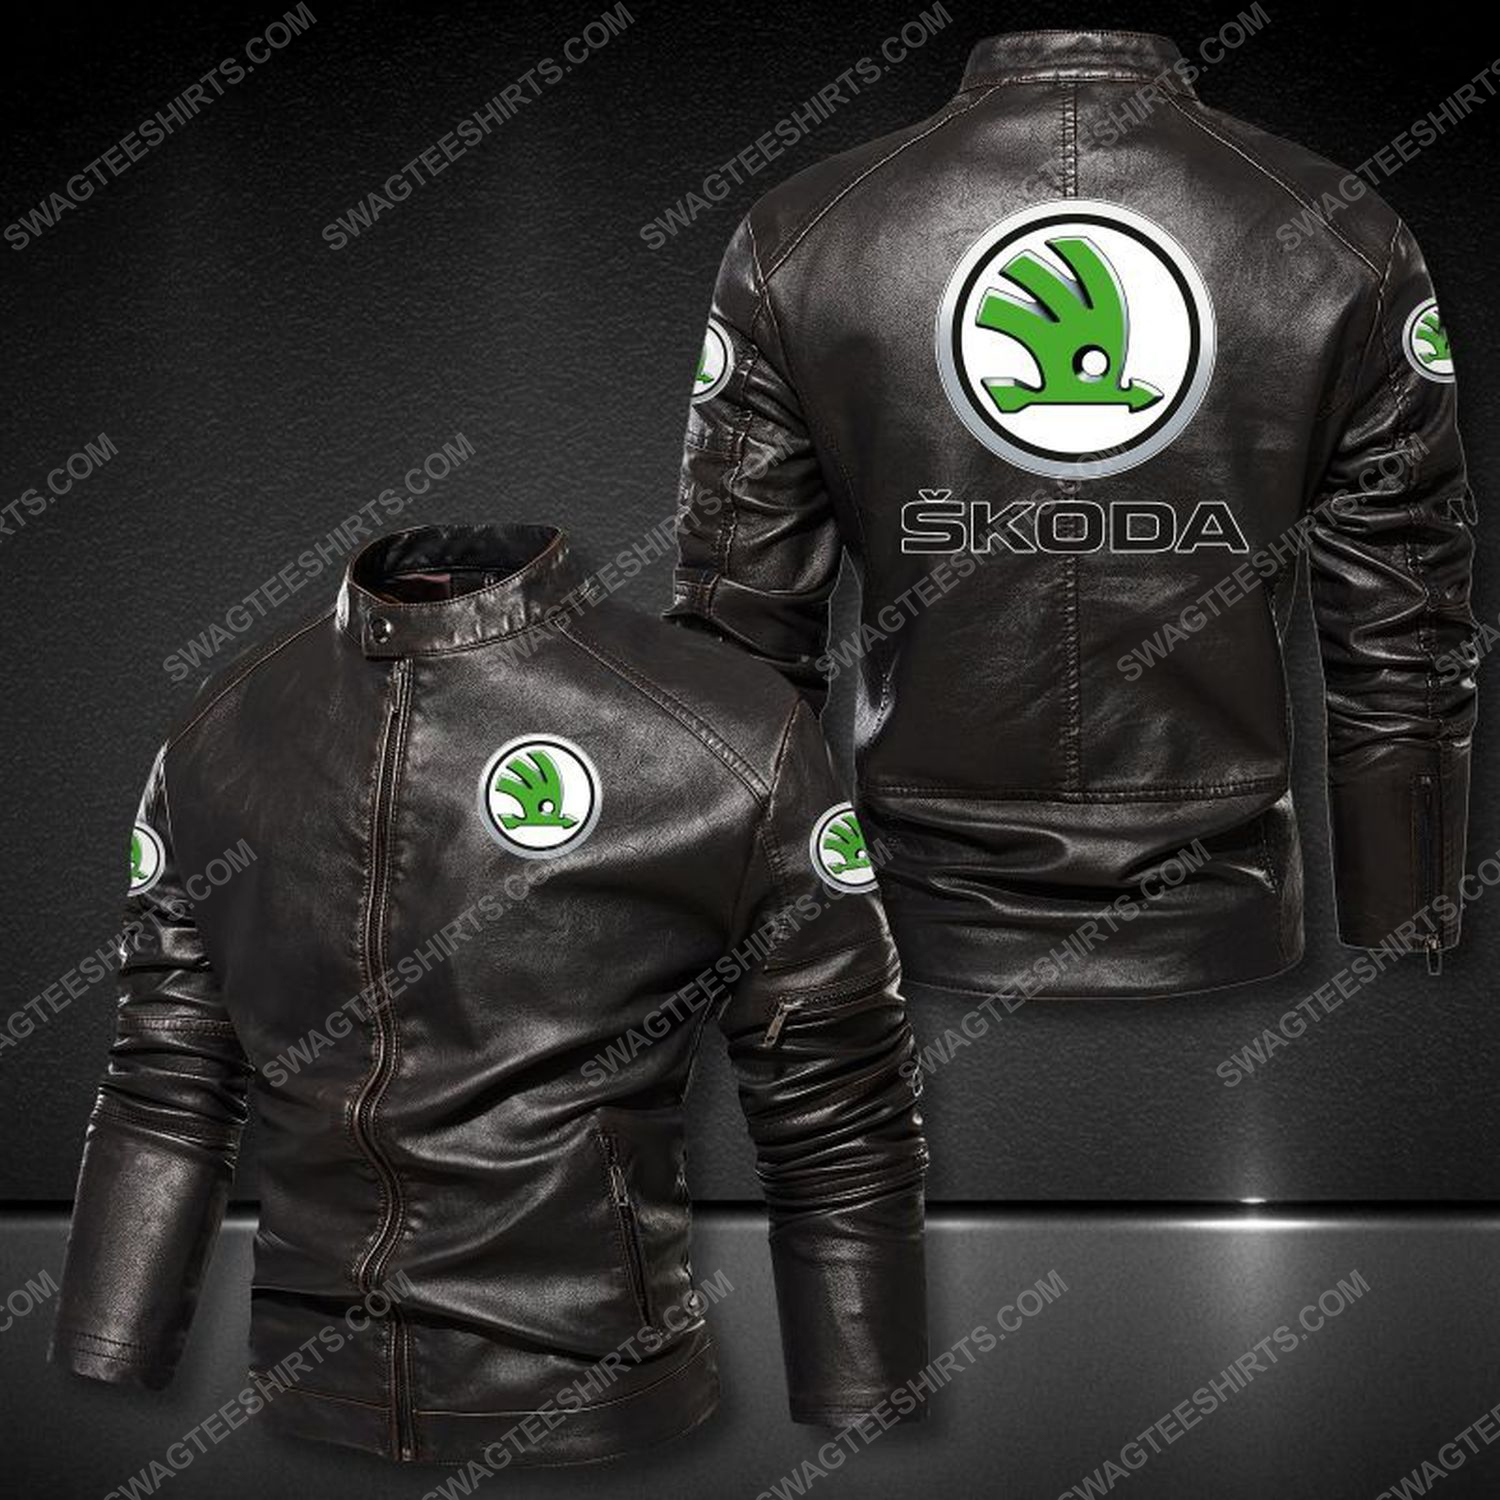 Skoda auto motorsport racing car leather jacket 1 - Copy